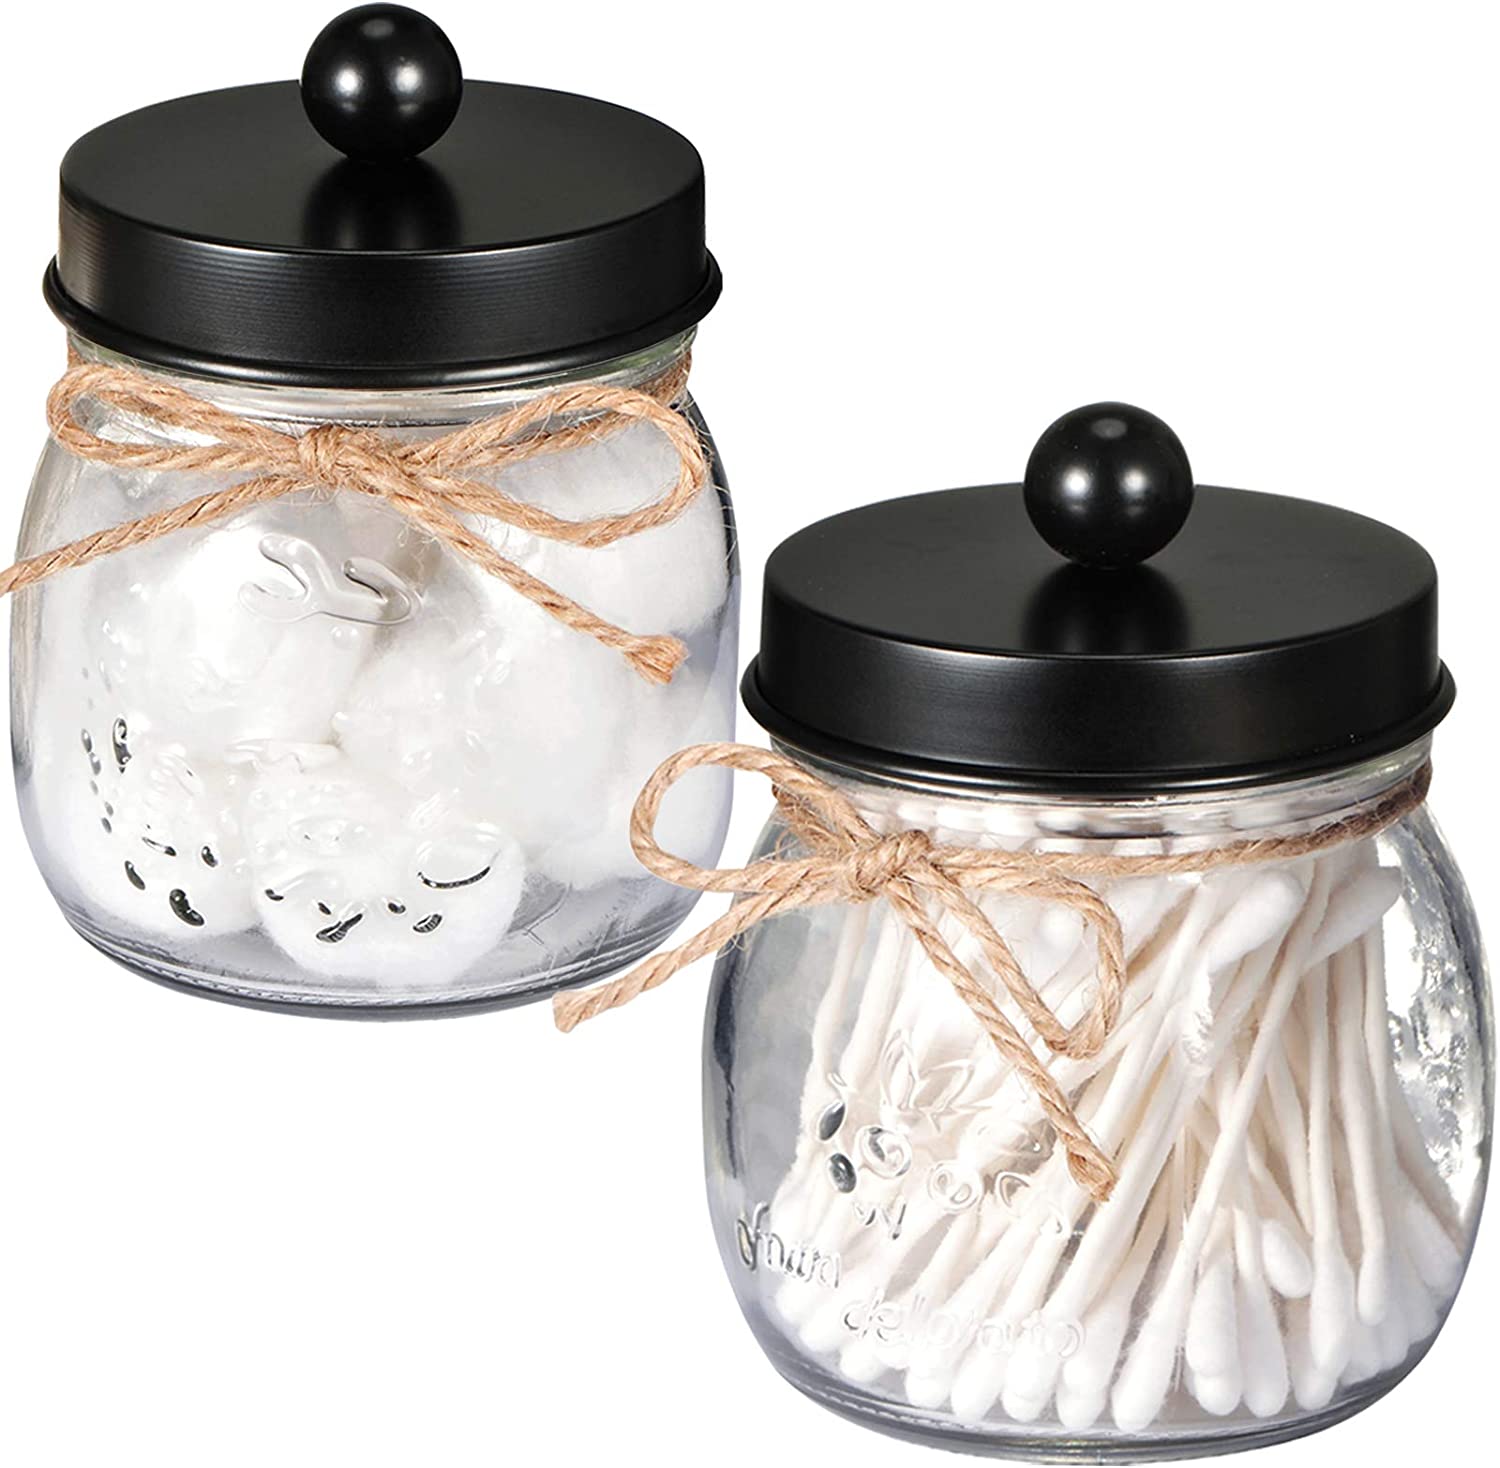 SheeChung Twine Wrapped Mason Jar Bathroom Canisters, 2-Pack